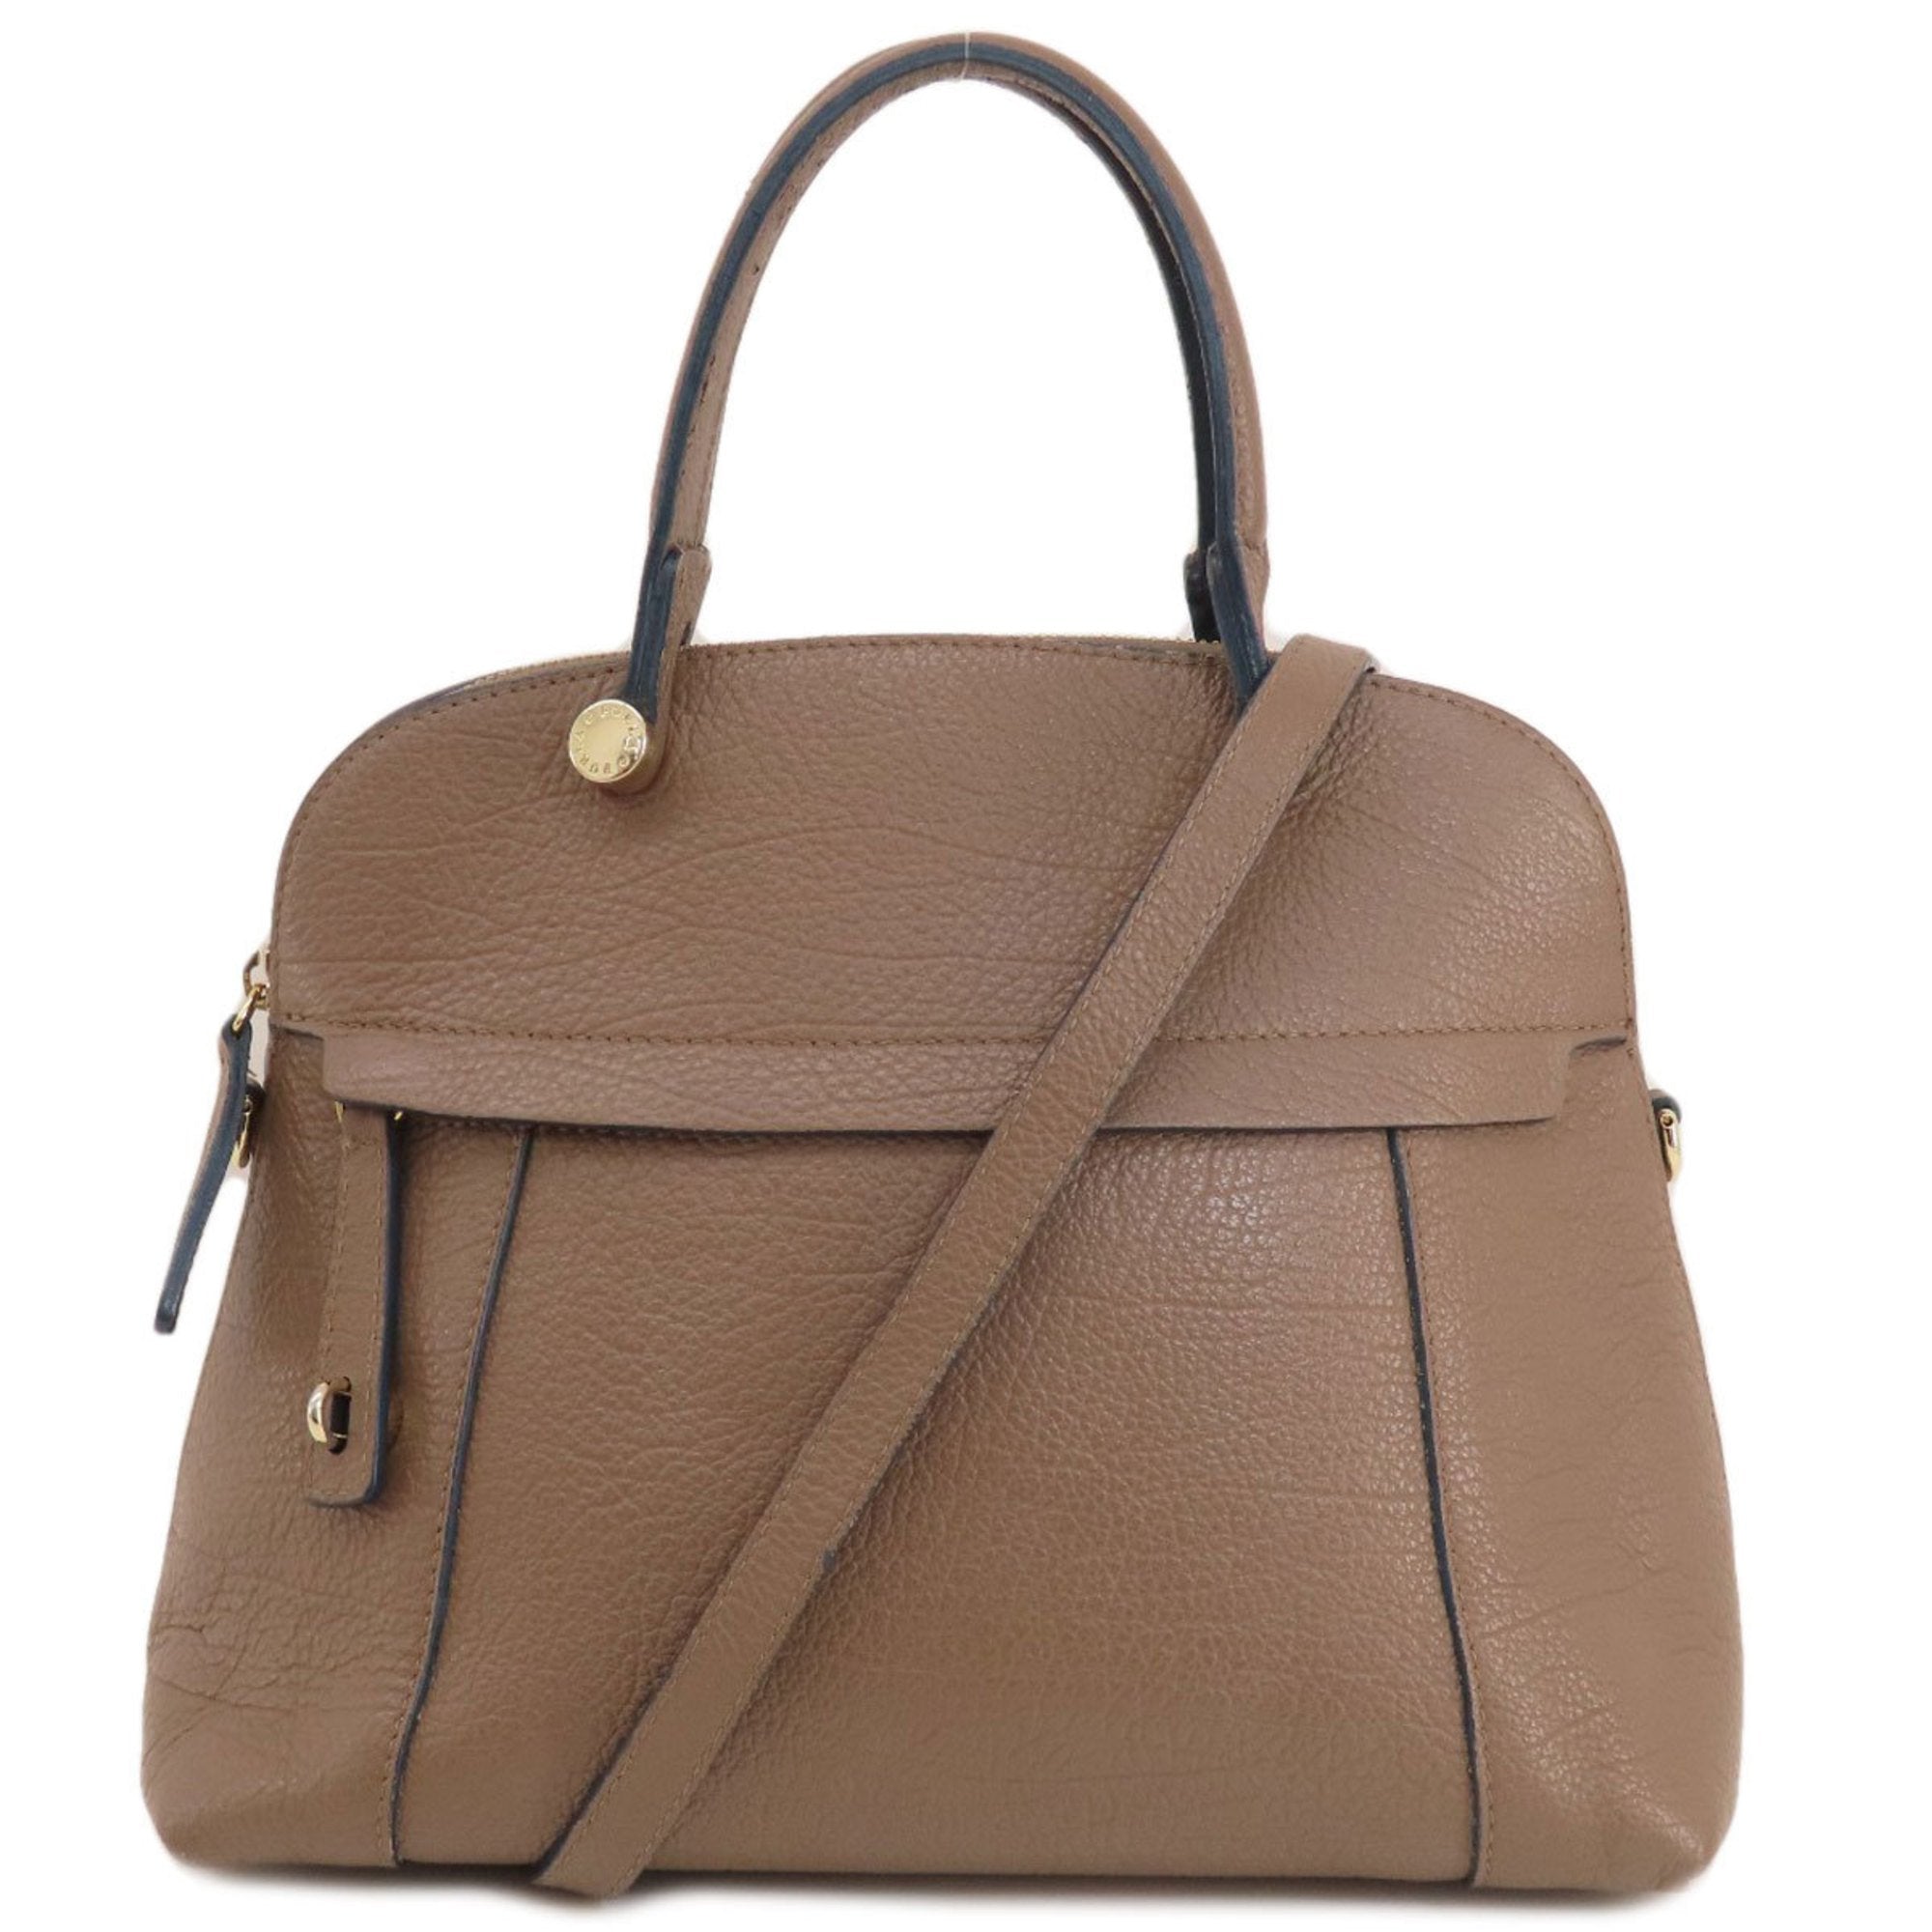 Piper Handbag Leather Women's